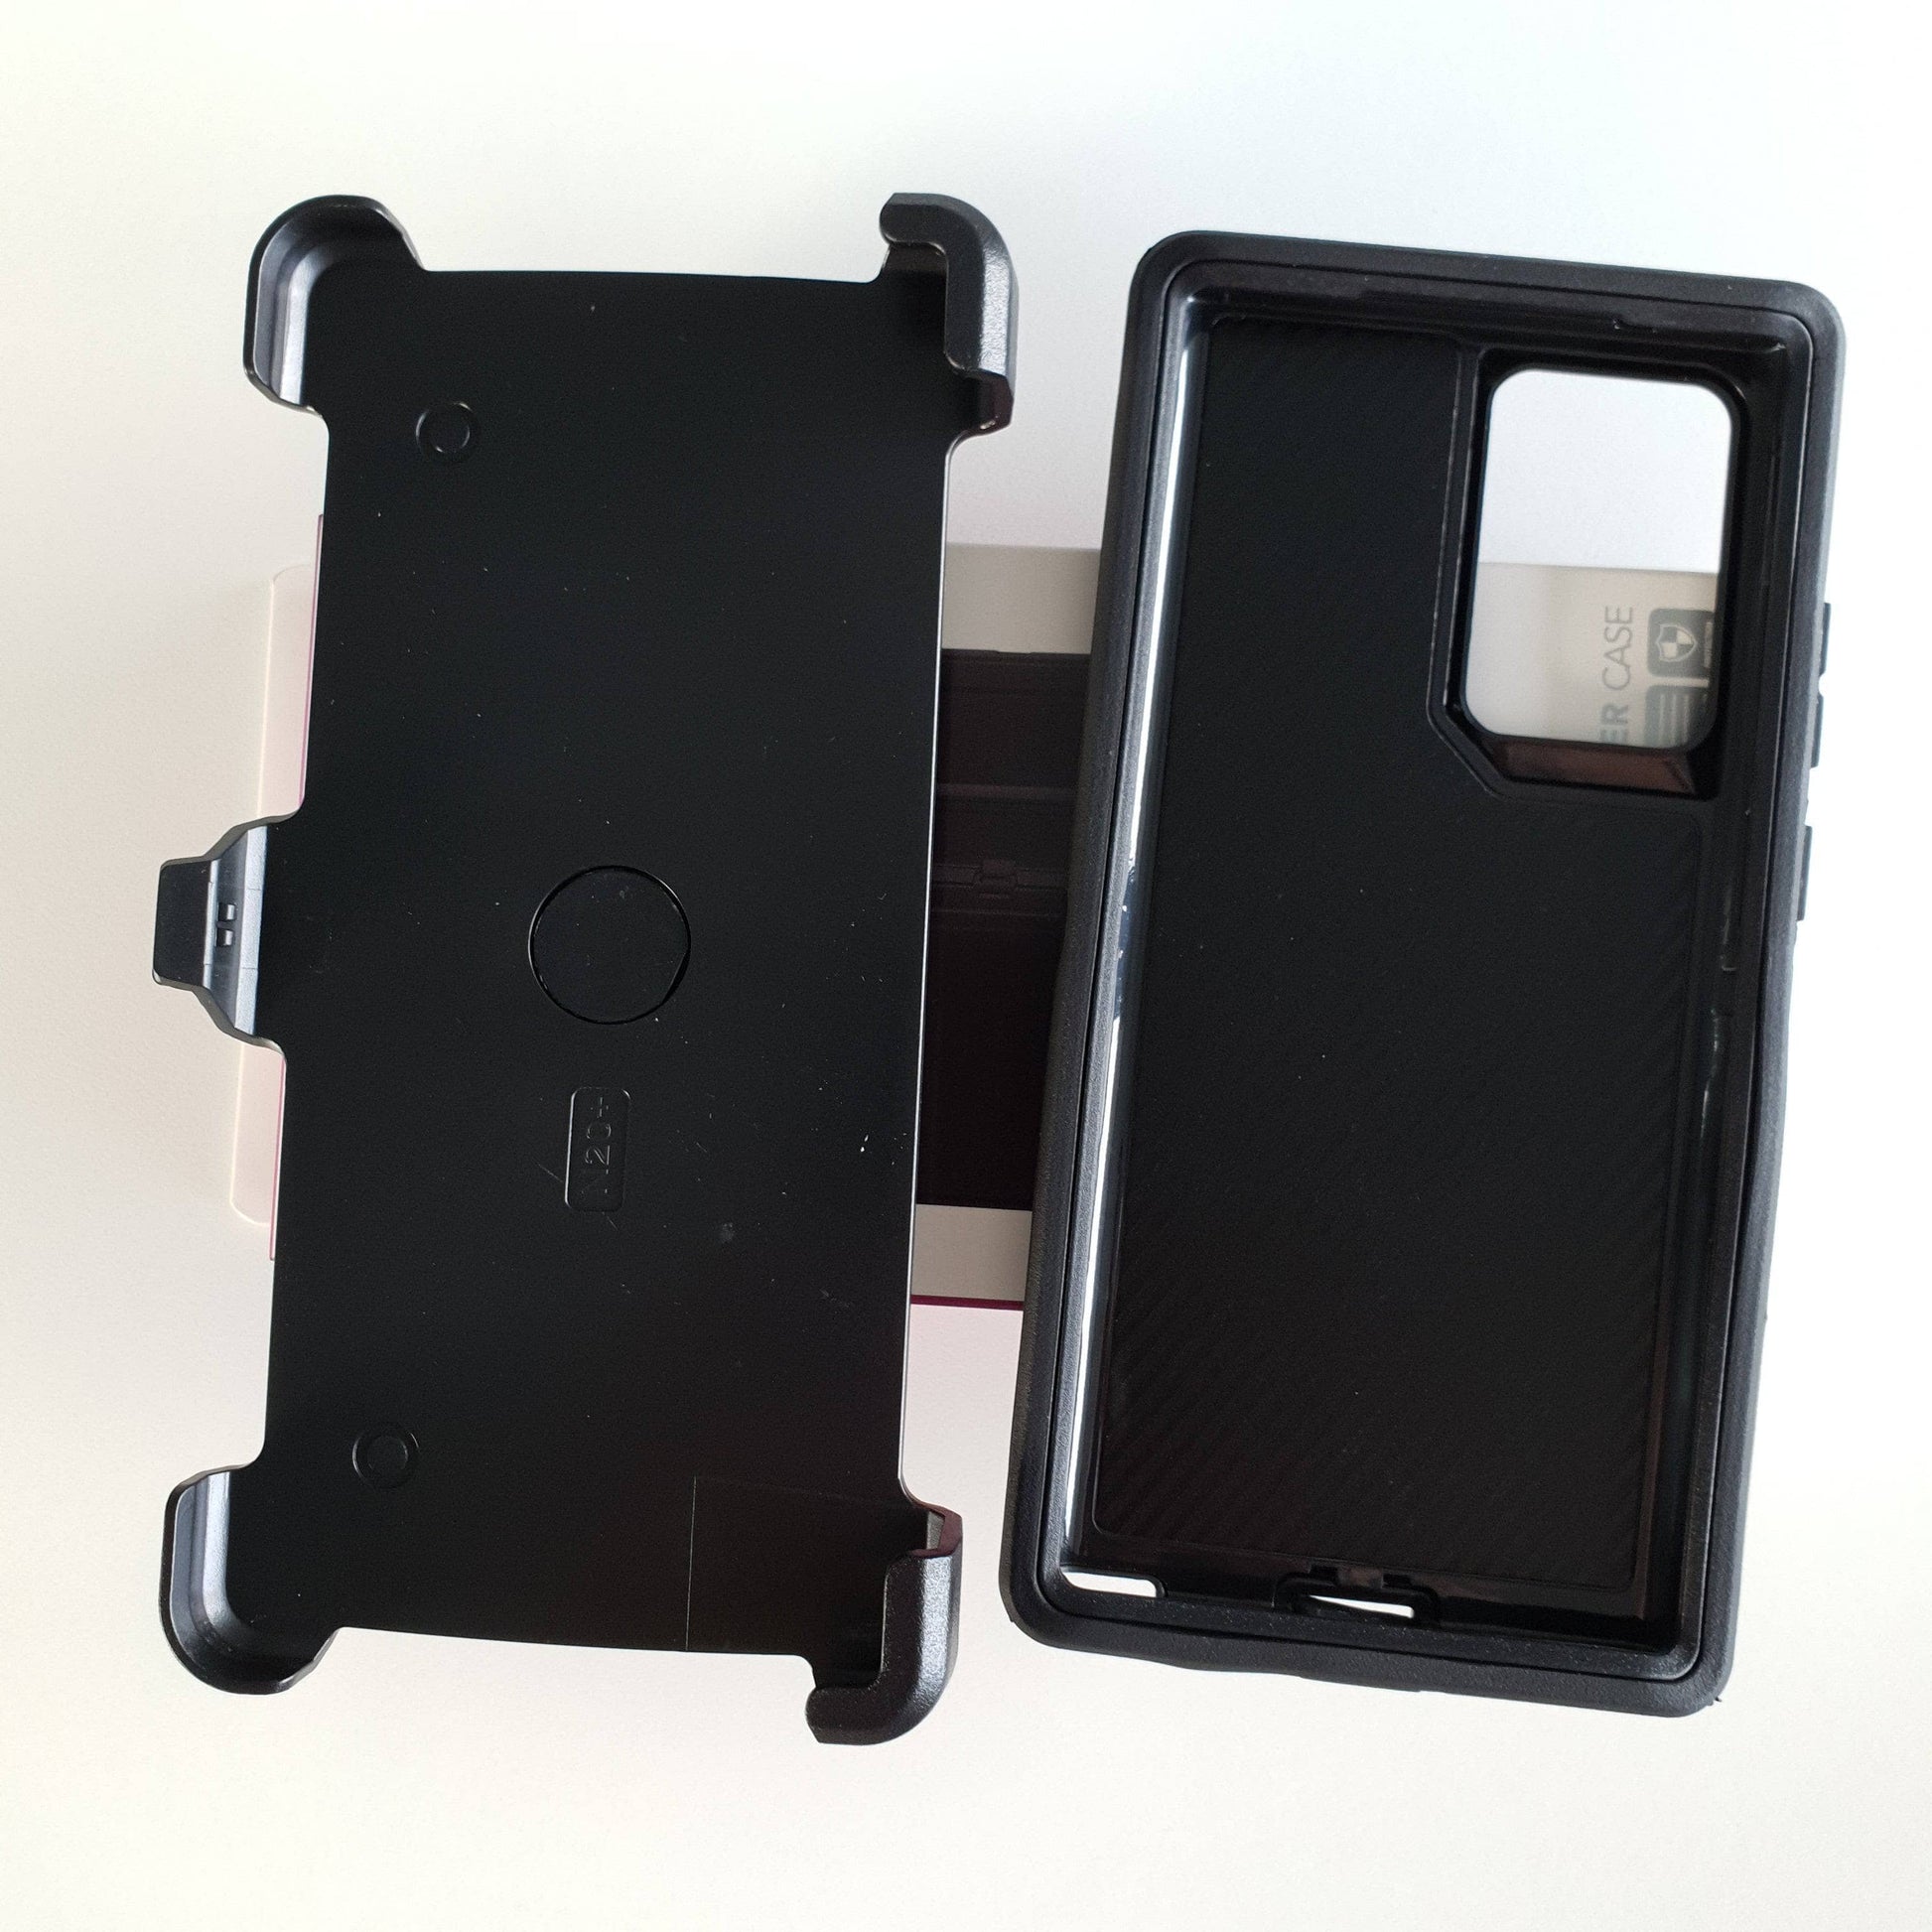 Blacktech Defender Shockproof Hard Hybrid Case for Galaxy Note 20 Ultra 6.7-Phone Case-Blacktech-www.PhoneGuy.com.au